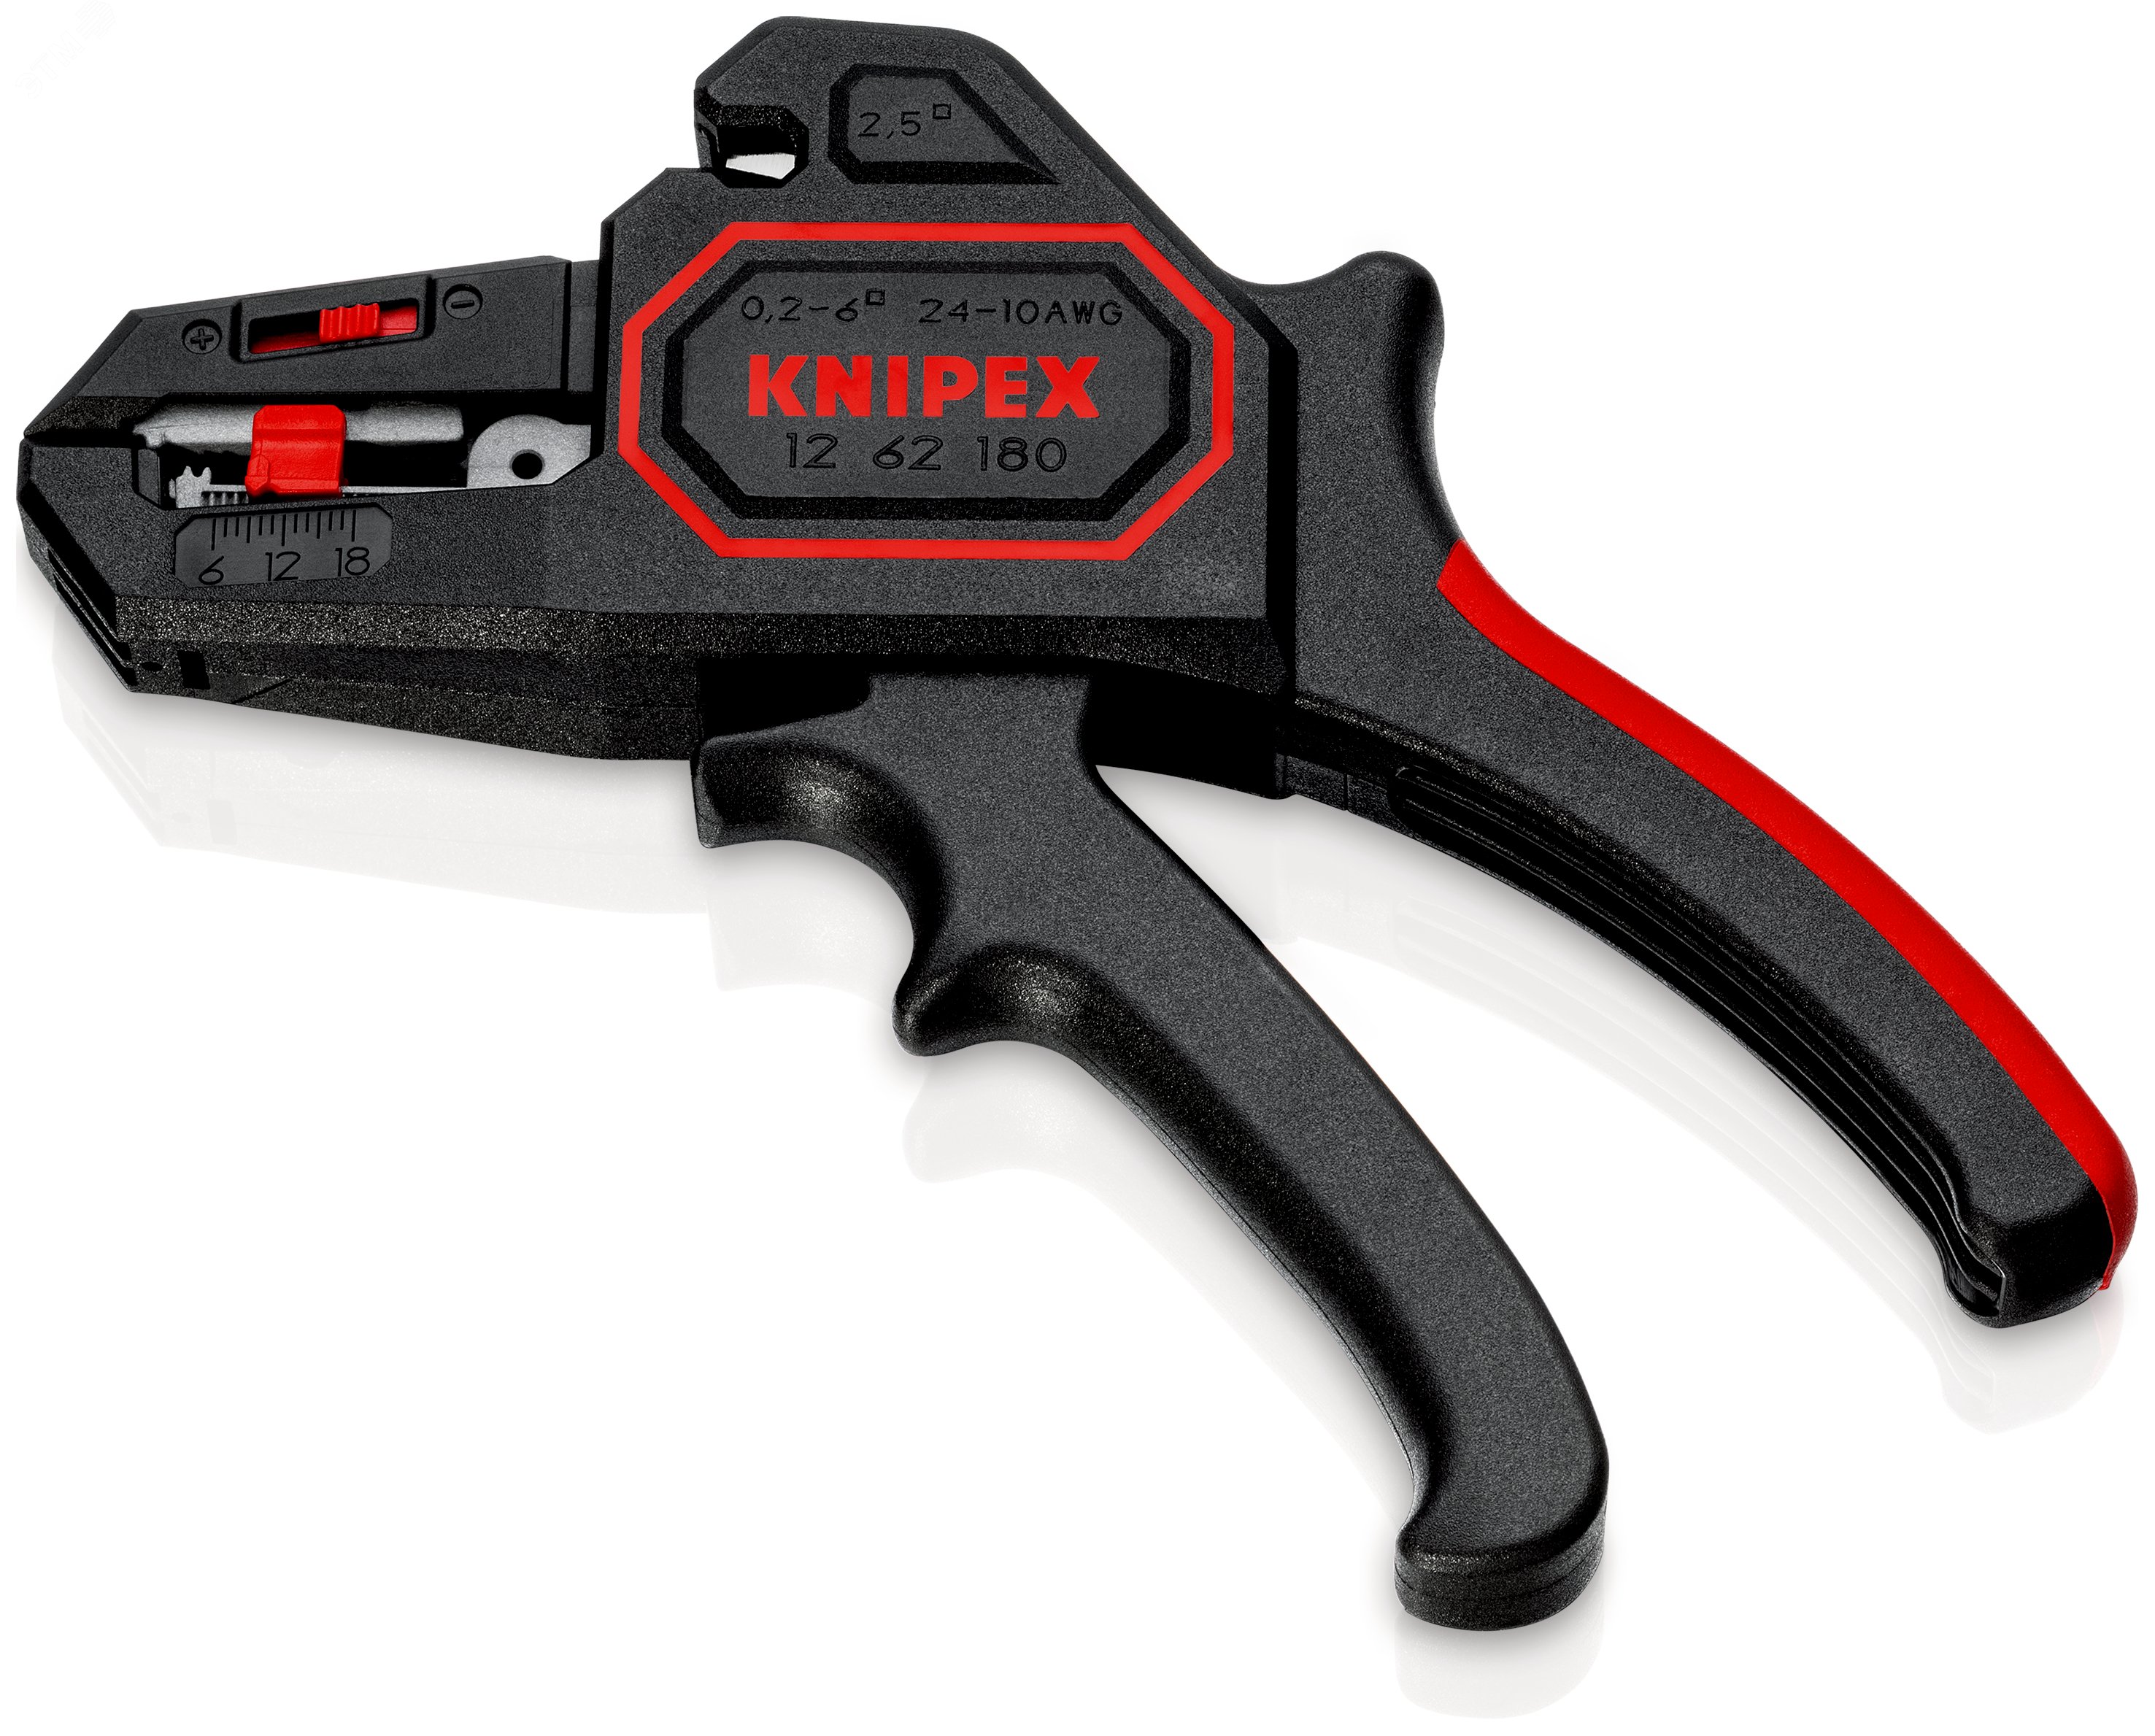 Стриппер автоматический зачистка 02-6мм (AWG 24-10) резка - кабеля 25мм L=195мм рукоятки с зоной мягкого пластика для надежного хвата блистер KN-1262180SB KNIPEX - превью 2